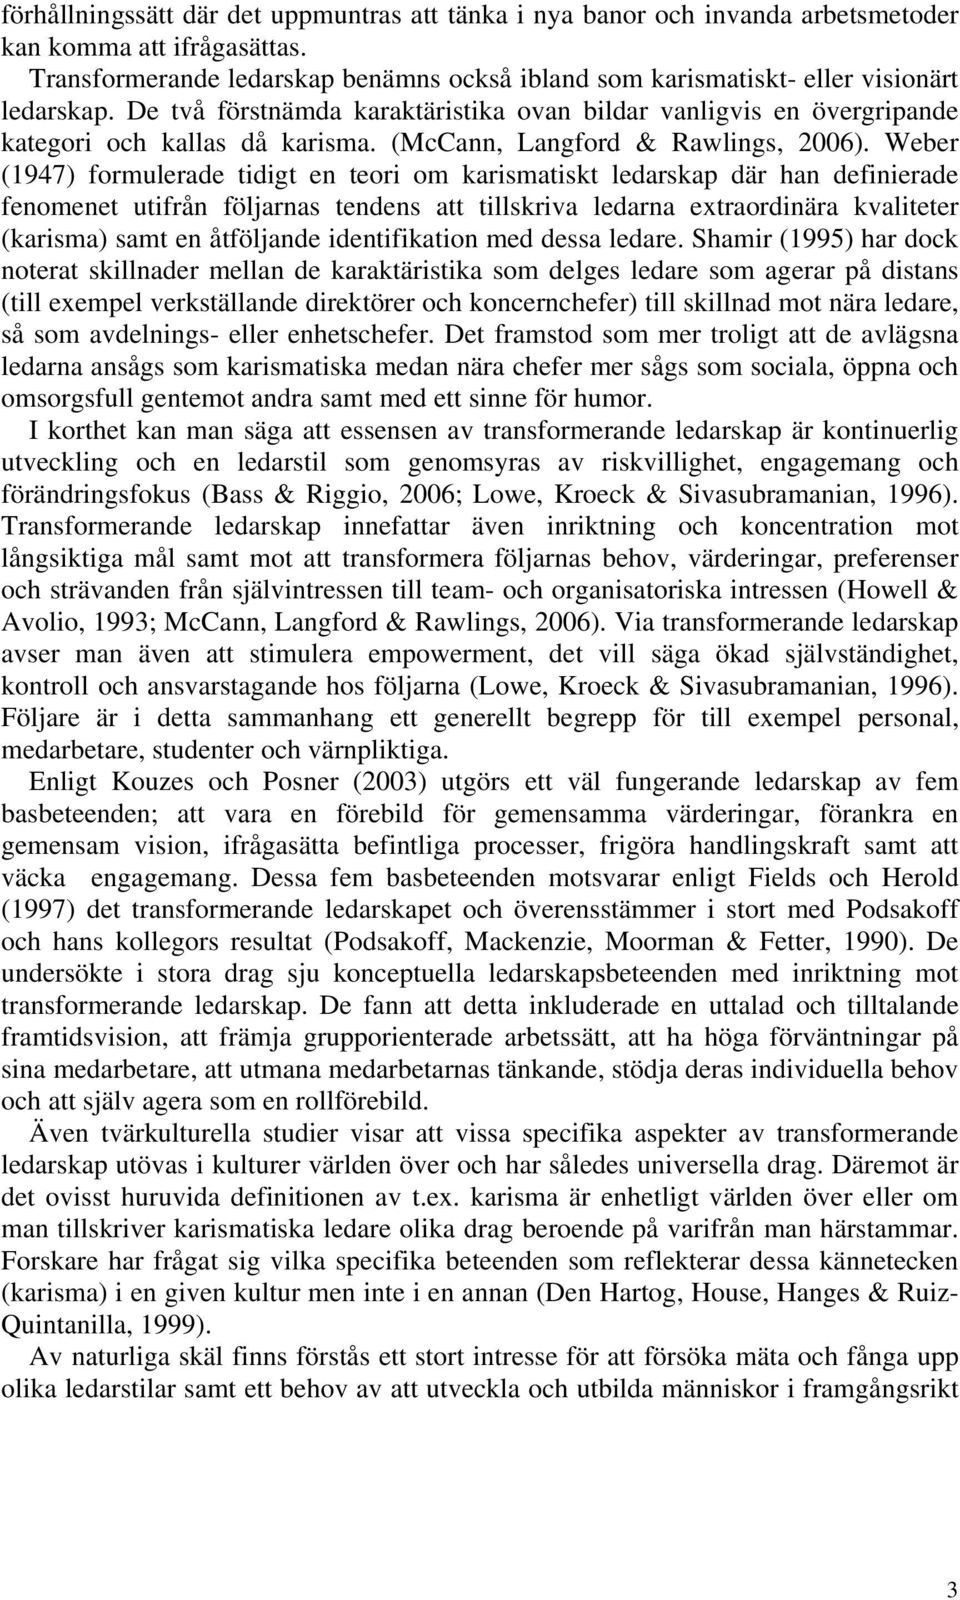 (McCann, Langford & Rawlings, 2006).